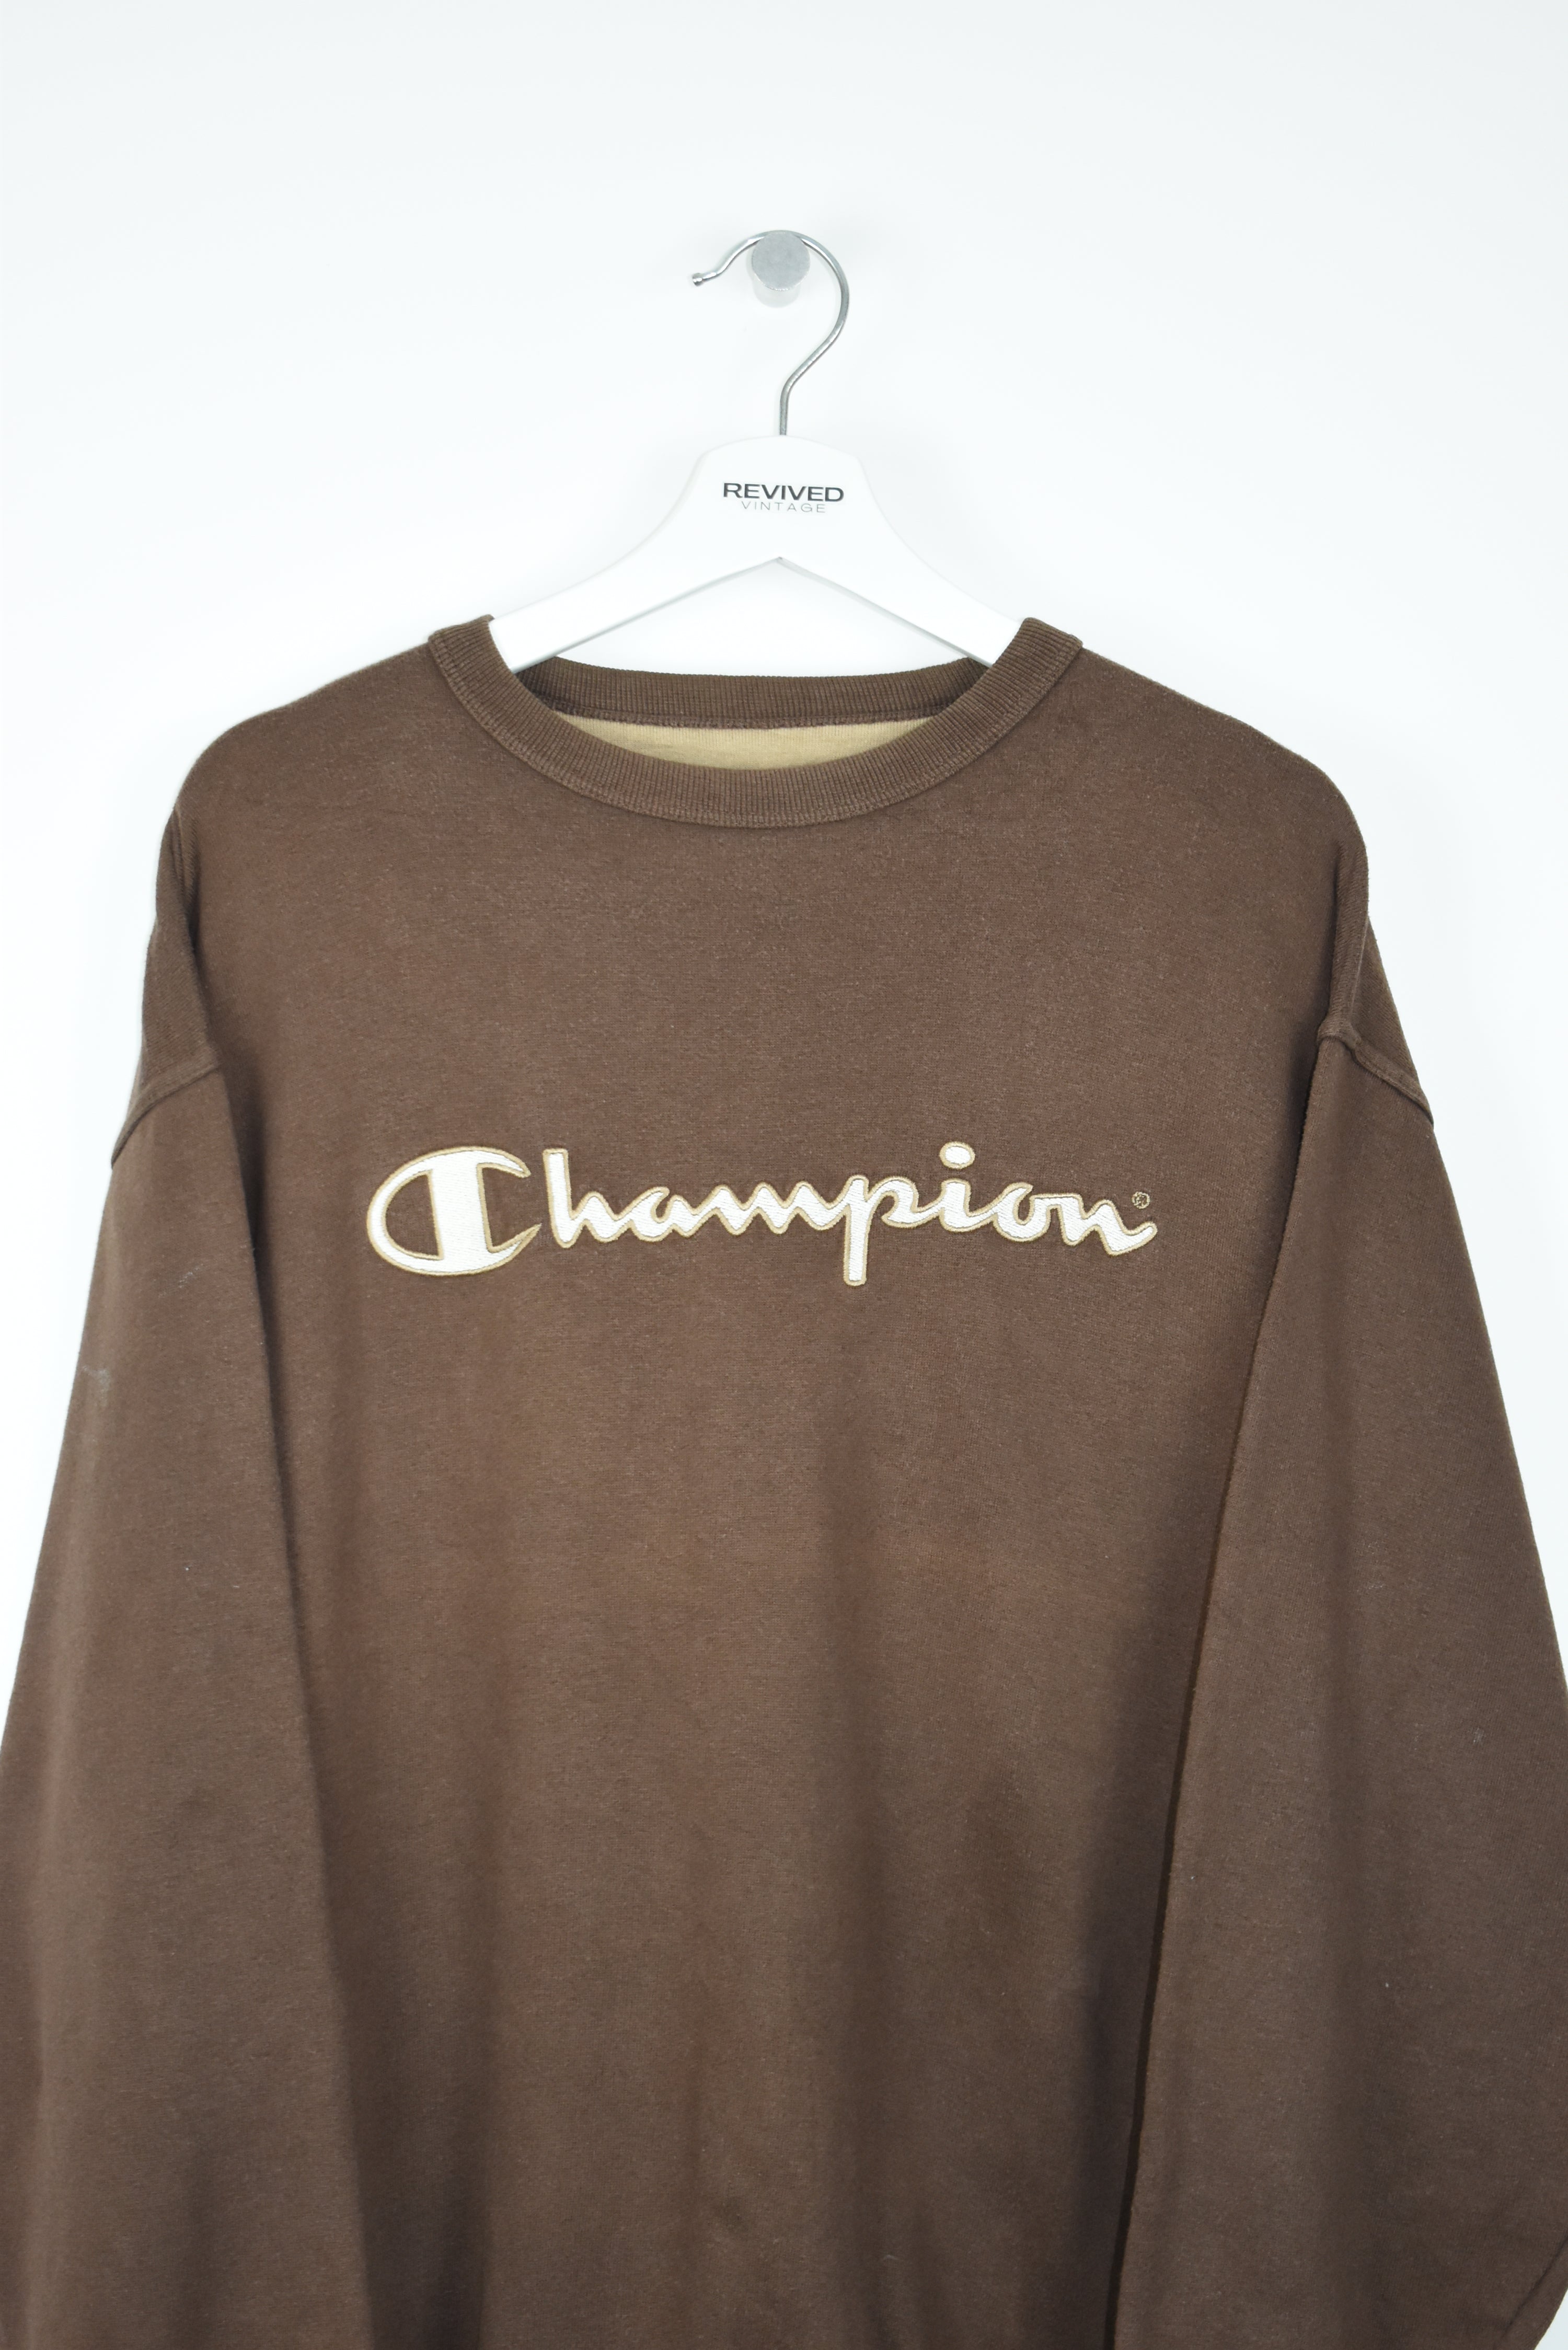 Vintage Champion Embroidery Logo Sweatshirt Brown Large